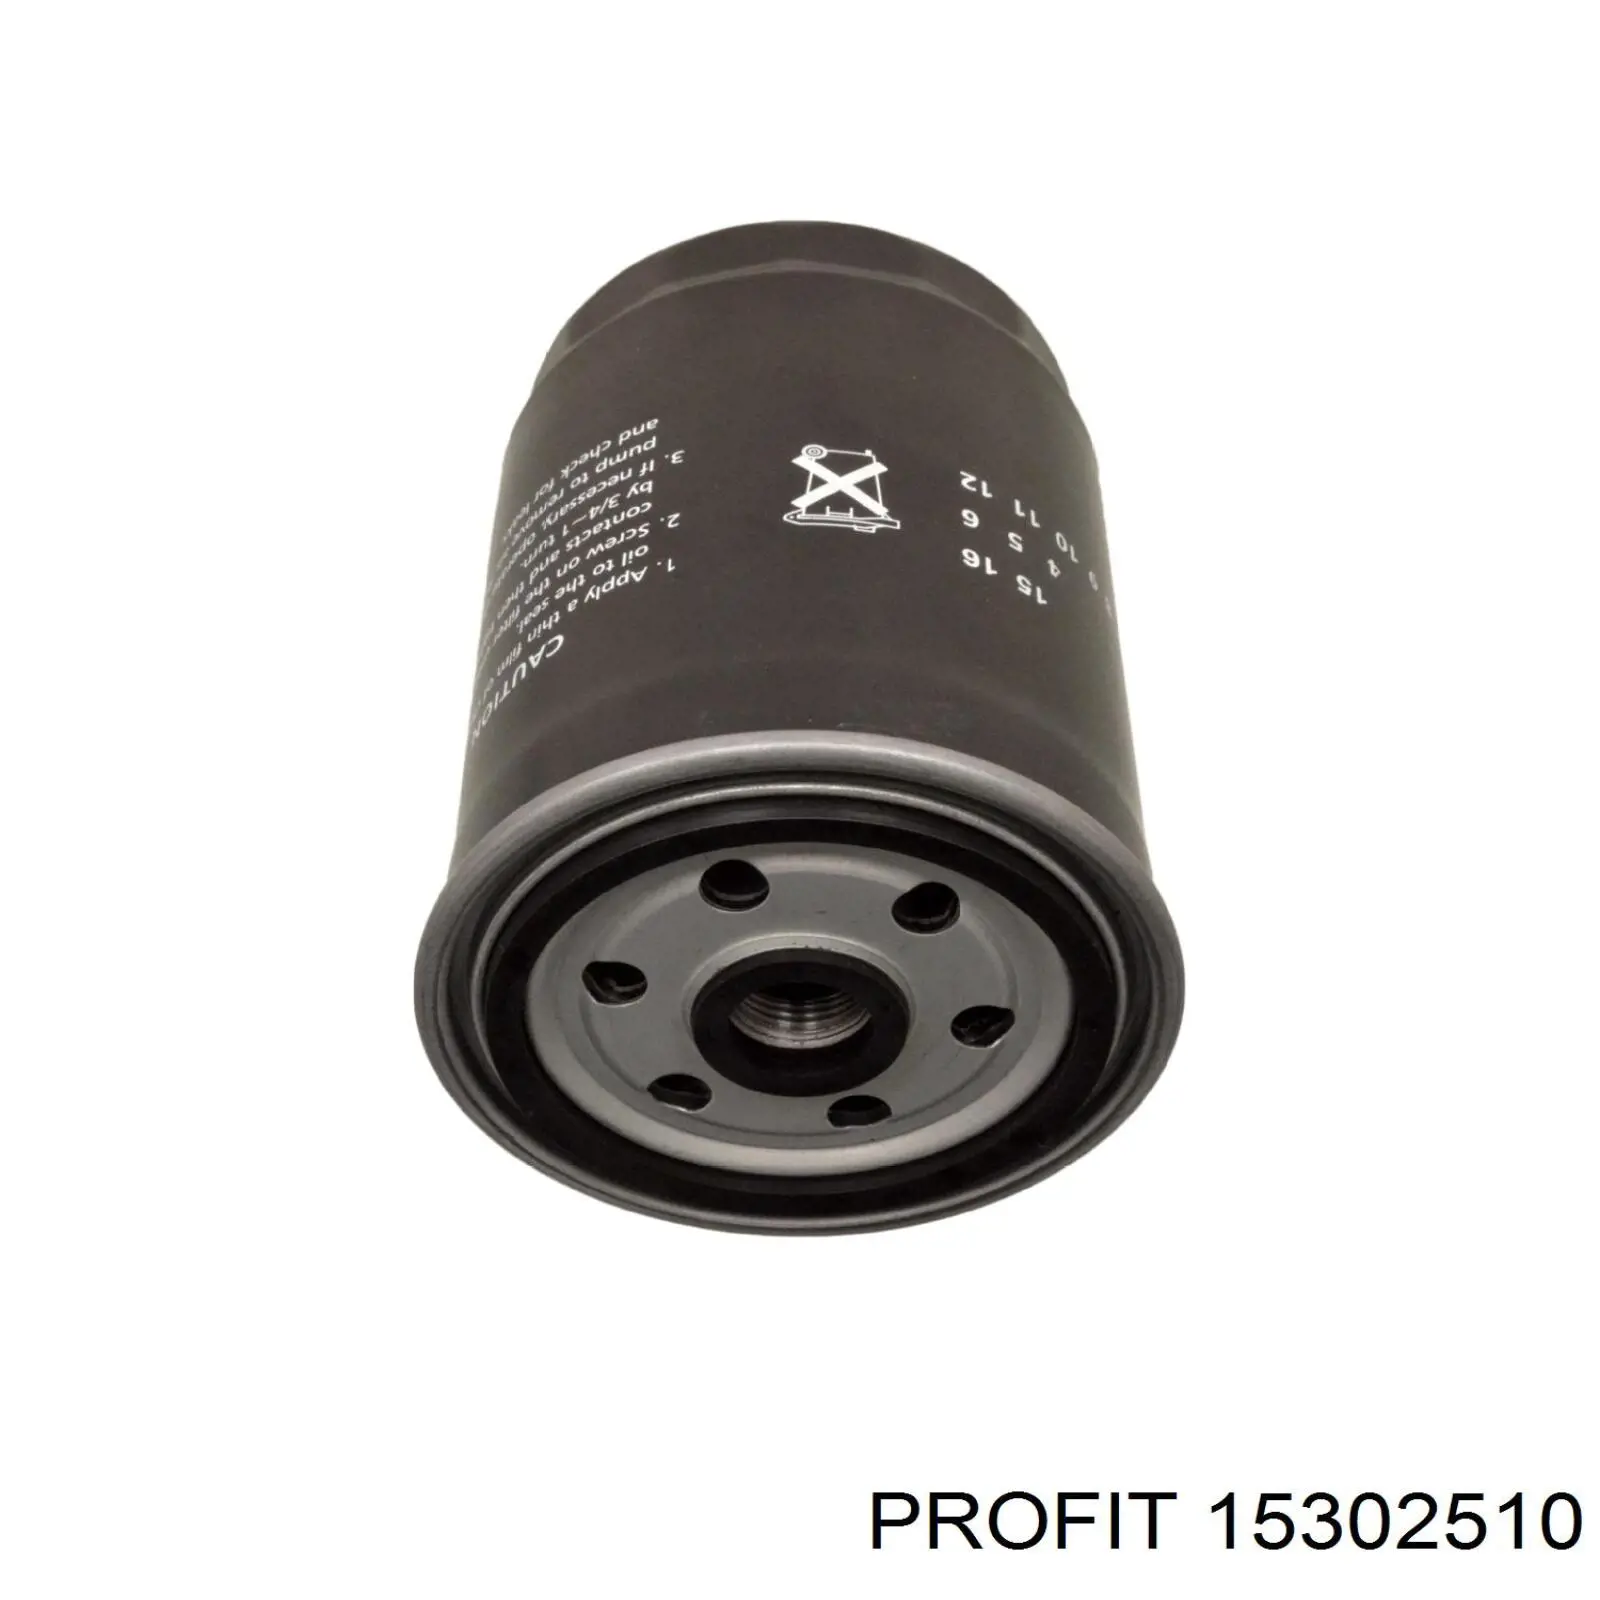 15302510 Profit filtro combustible